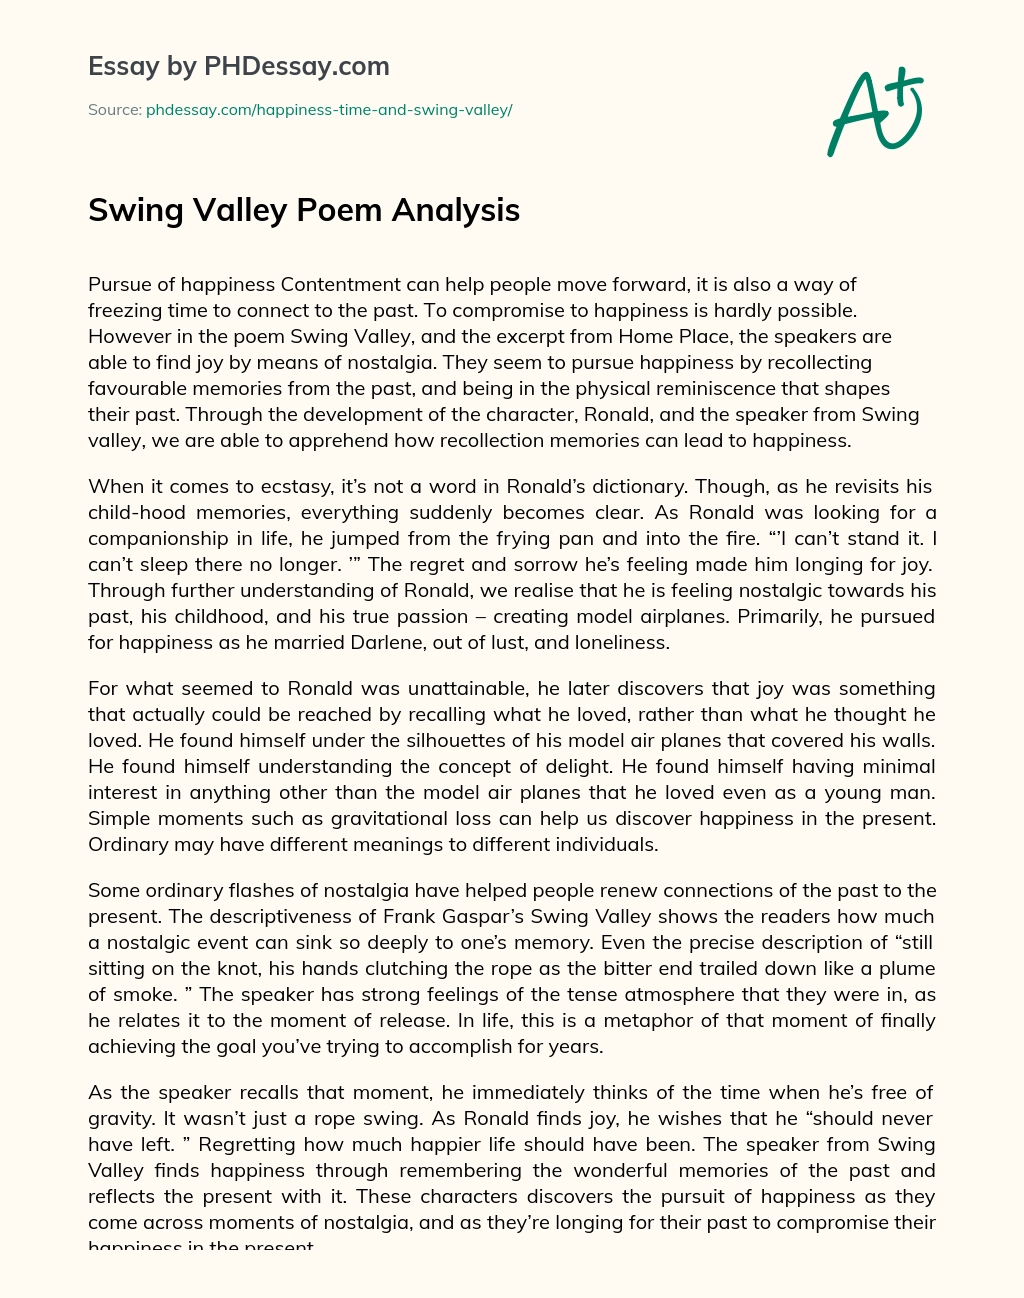 Swing Valley Poem Analysis essay